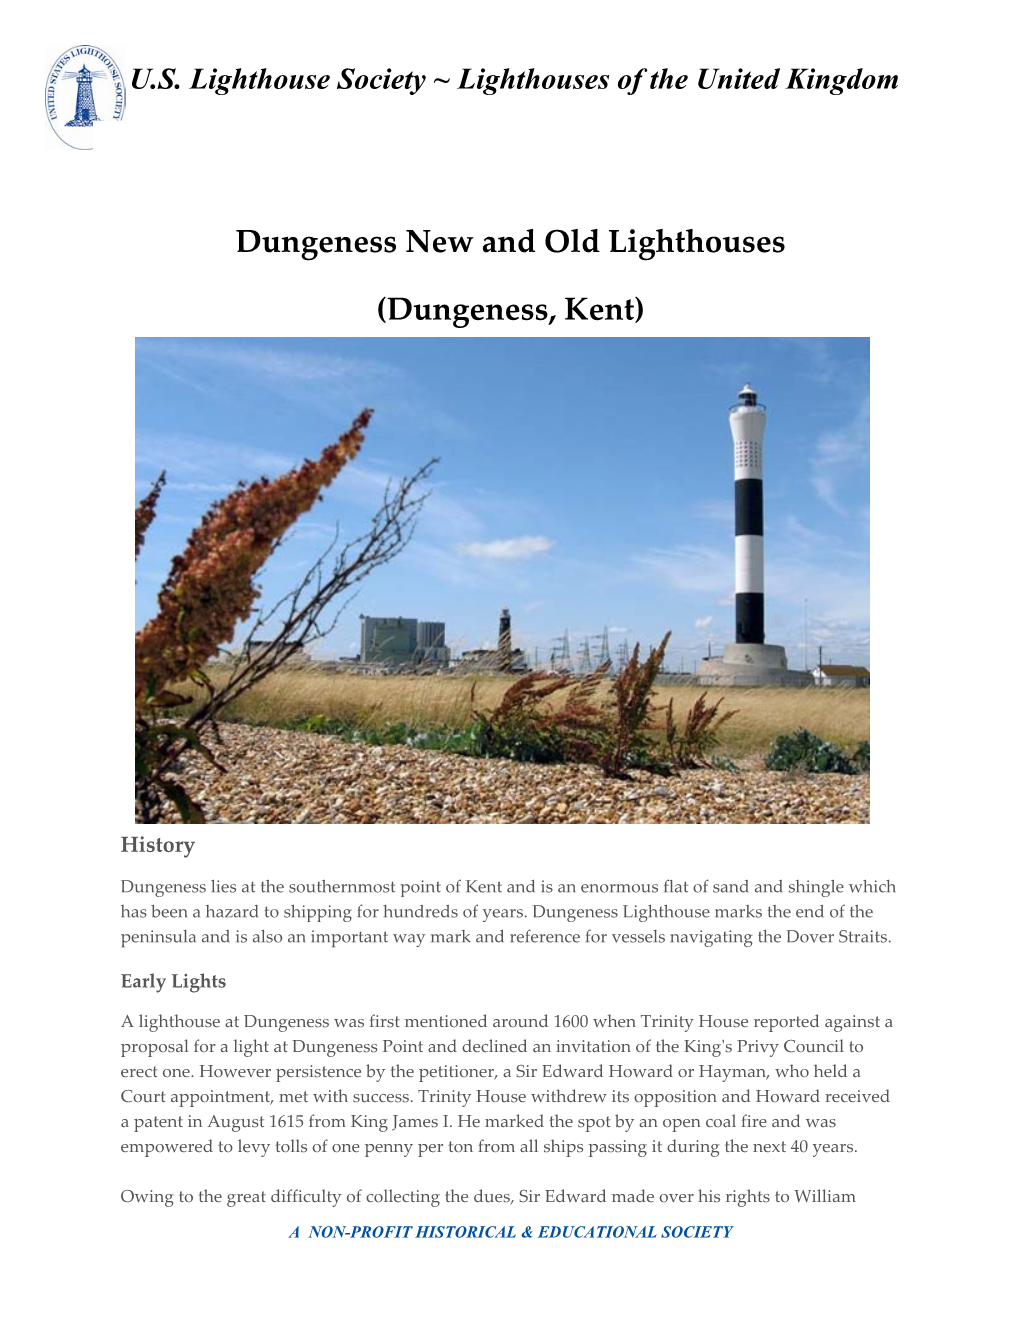 Dungeness Lighthouse, Dungeness